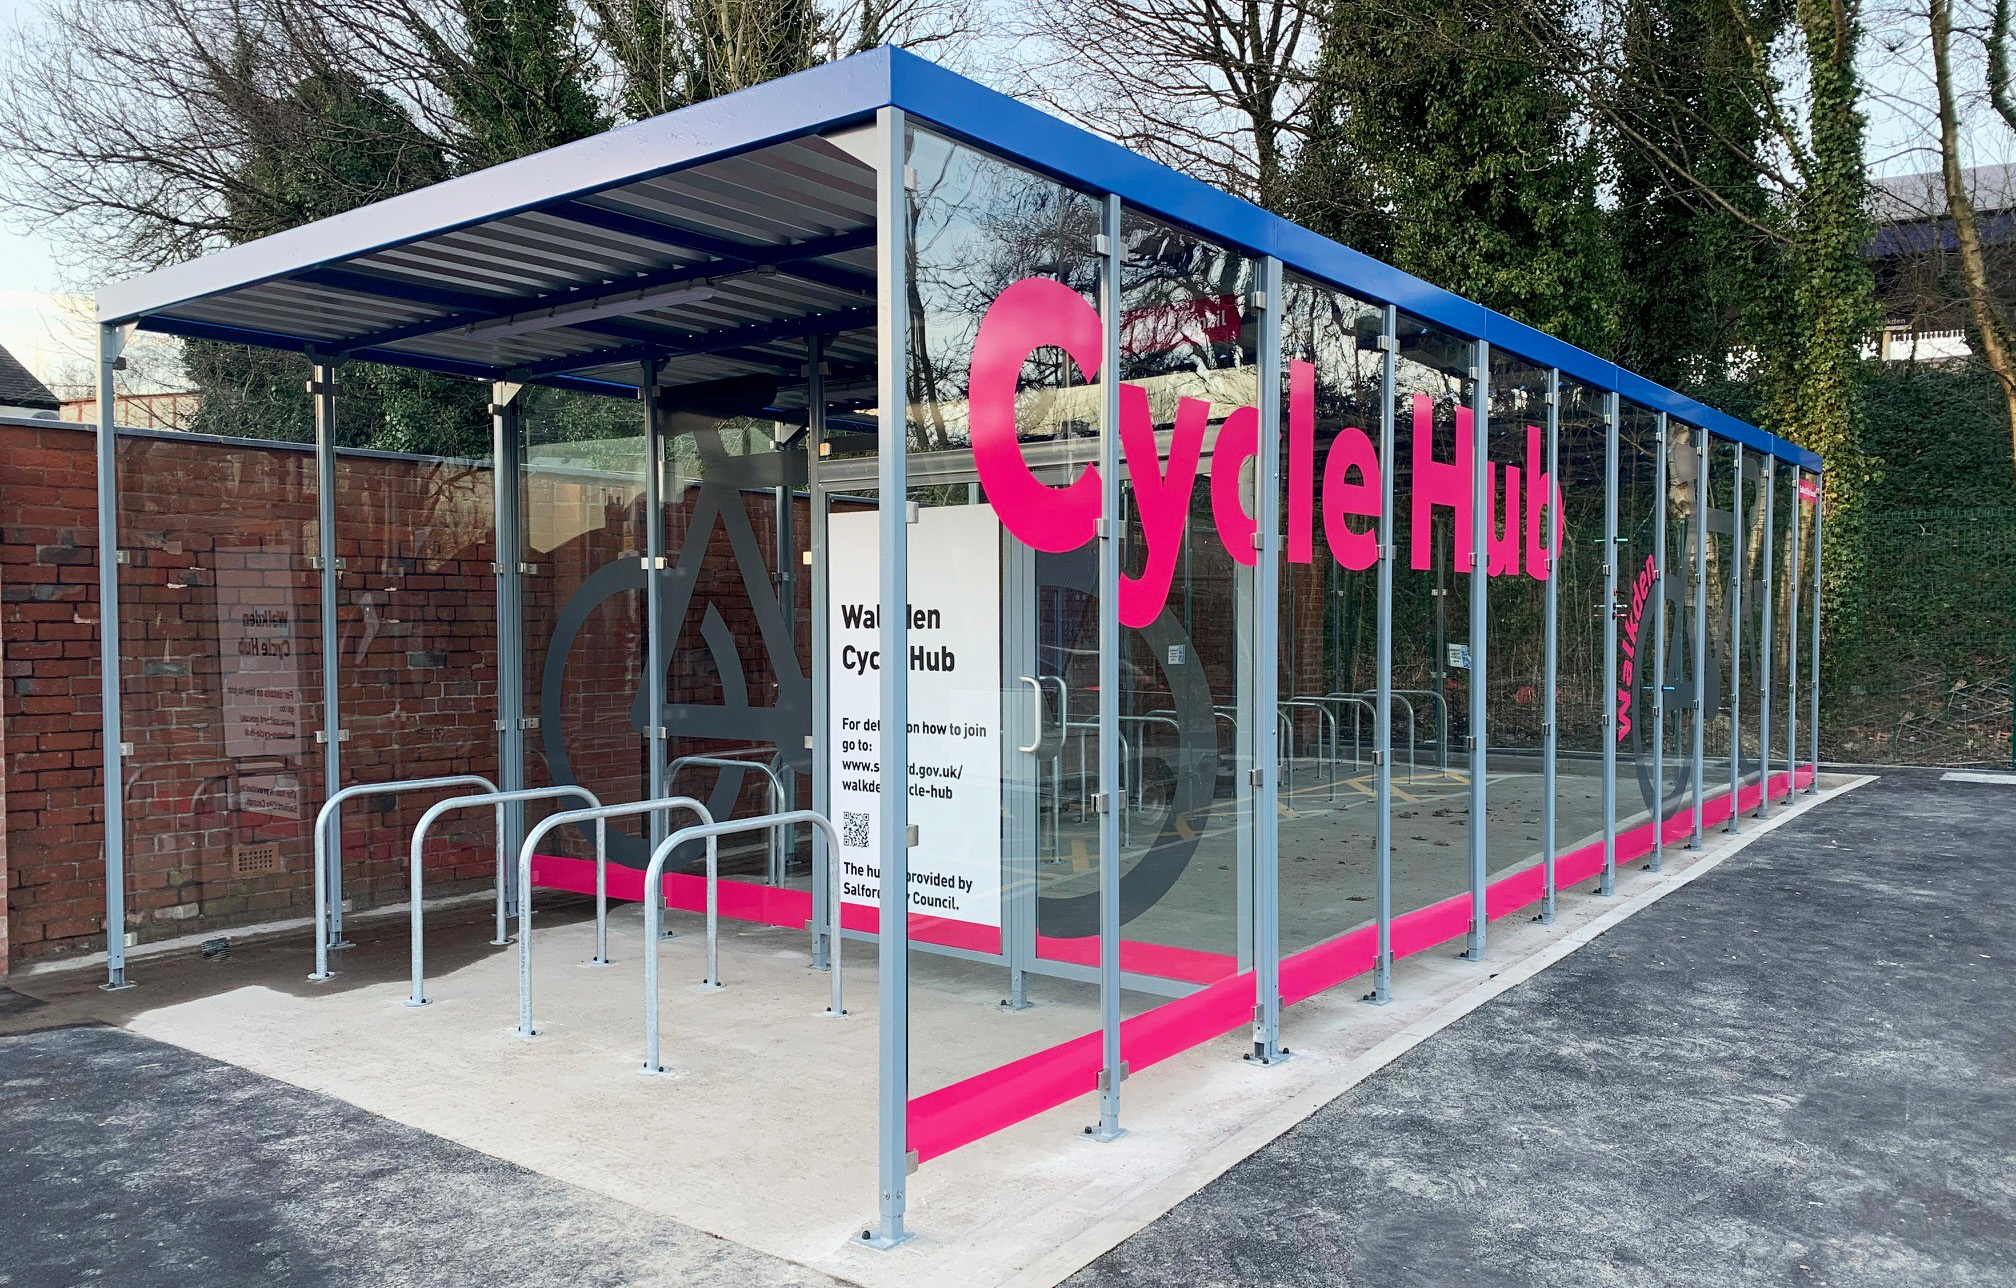 Walkden Station Cycle Hub